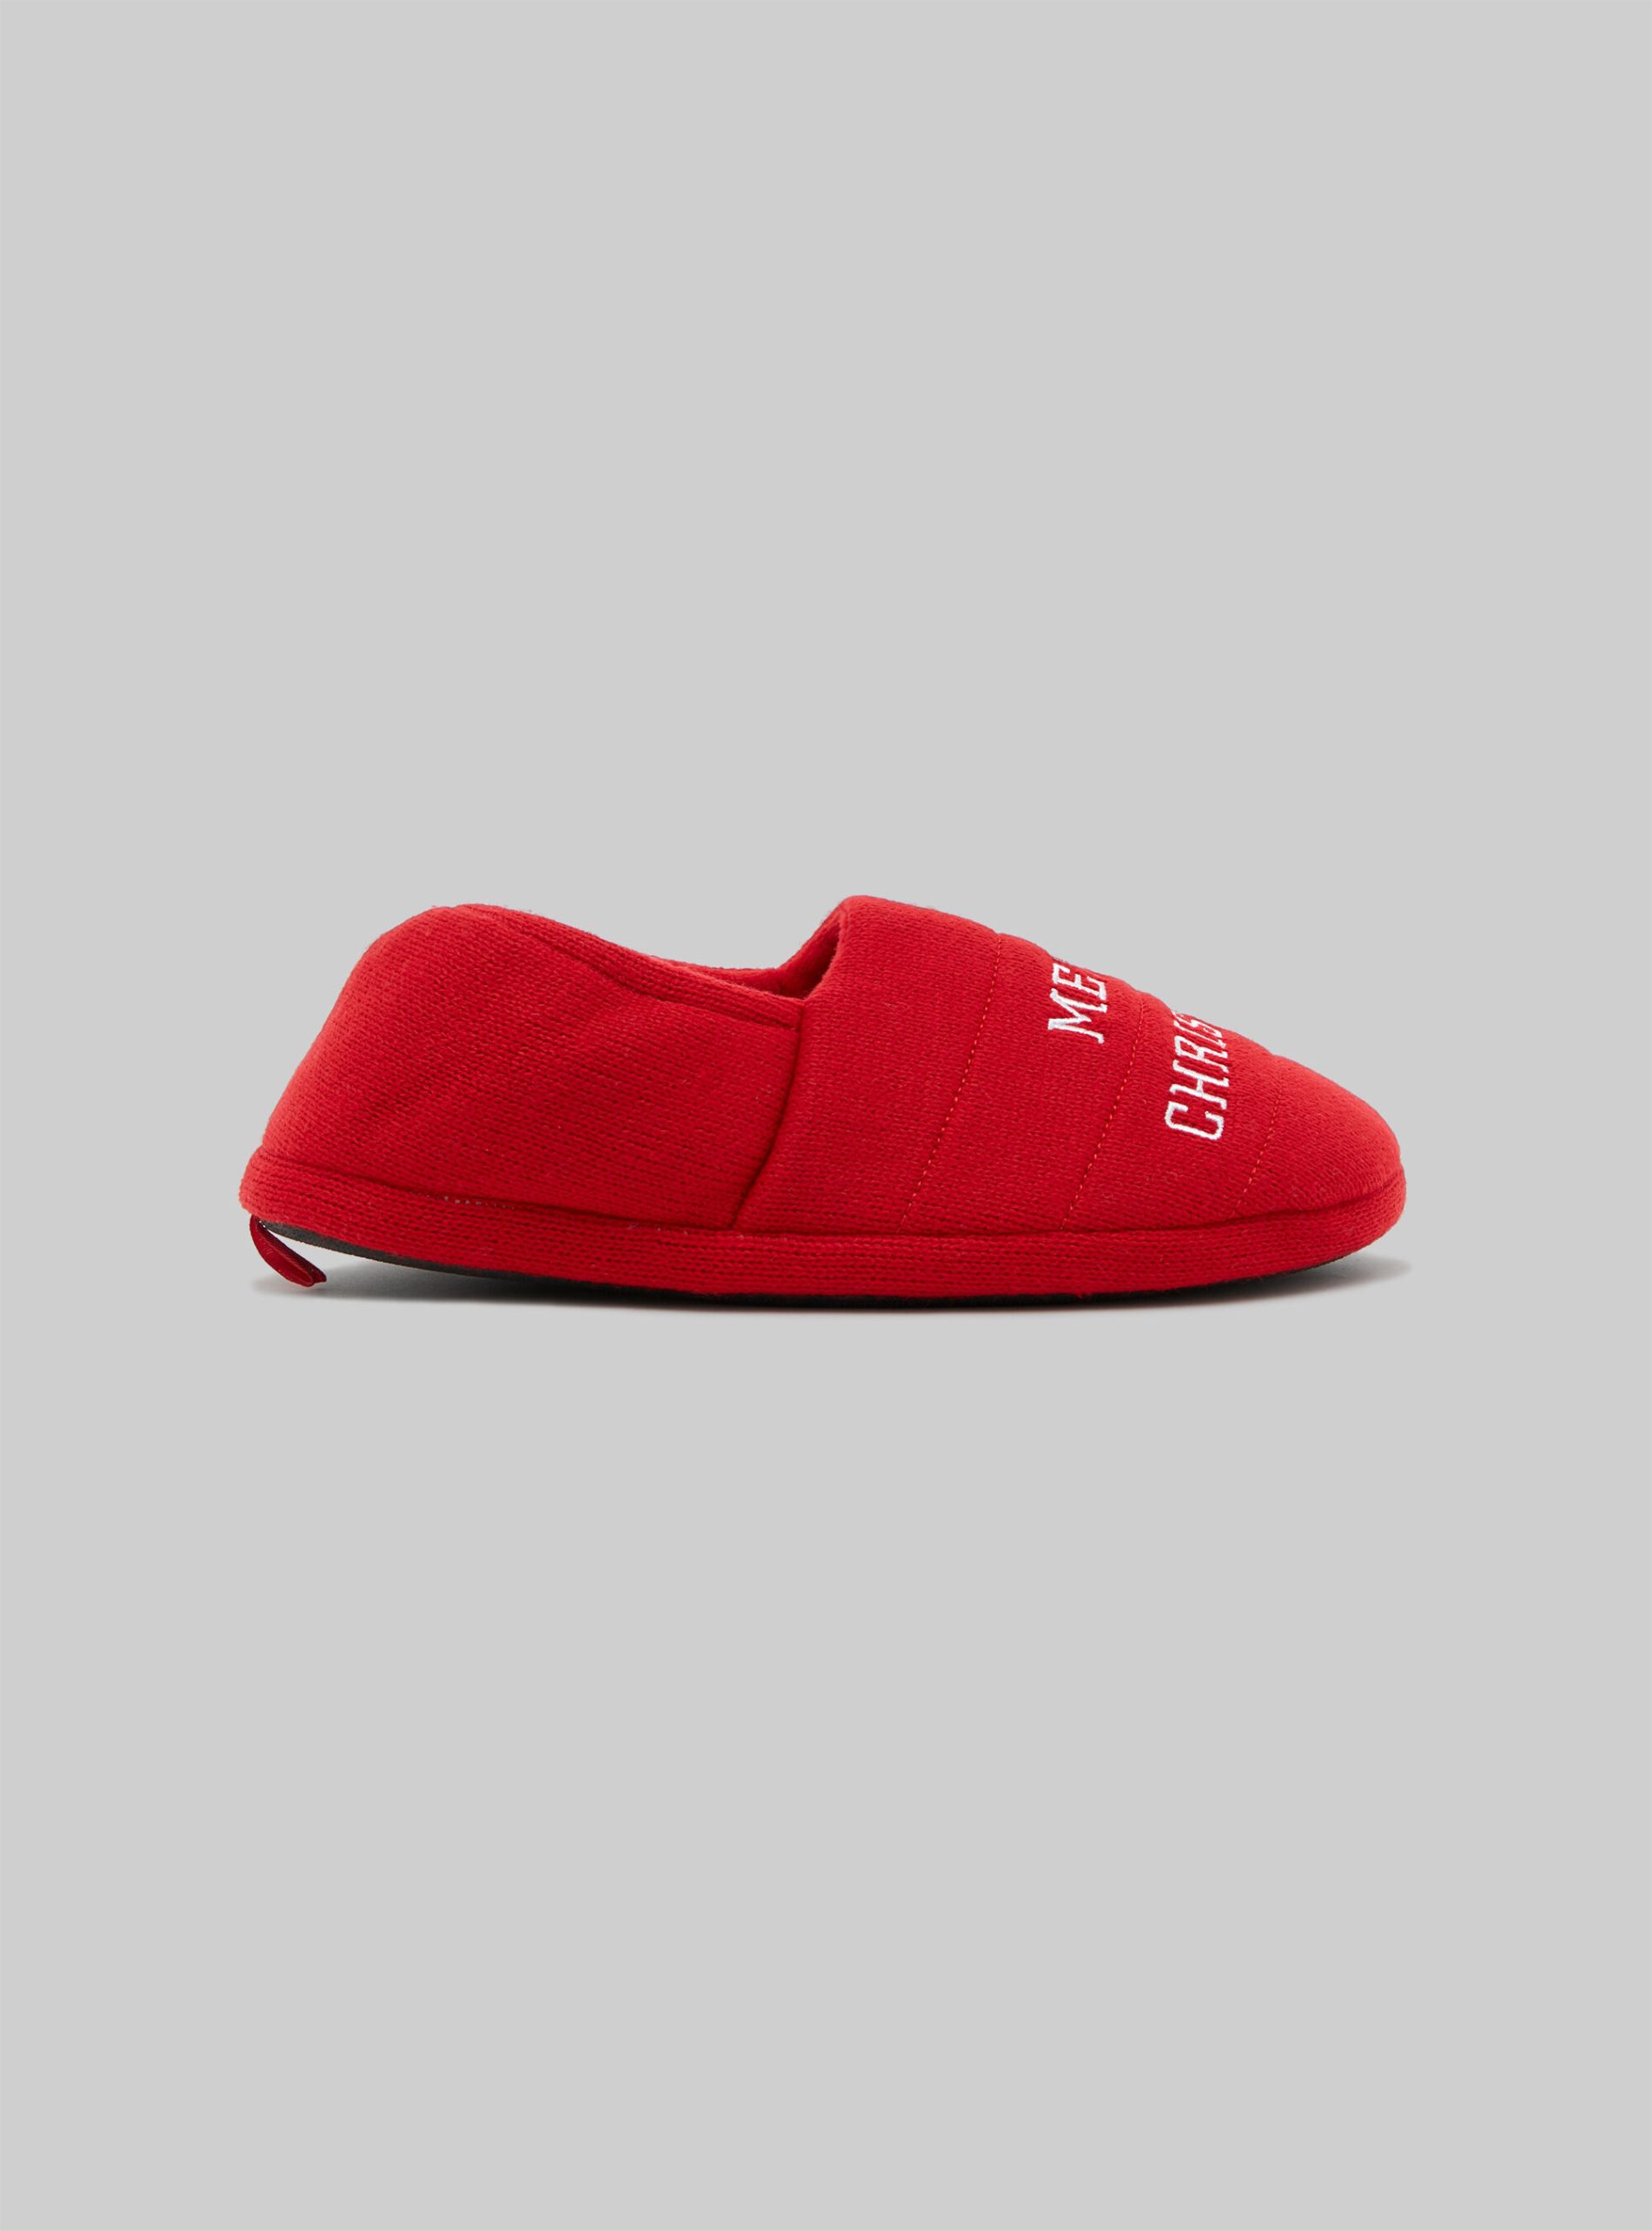 Männer Rd2 Red Medium Alcott Robustheit Schuhe Xmas Collection Slippers – 2